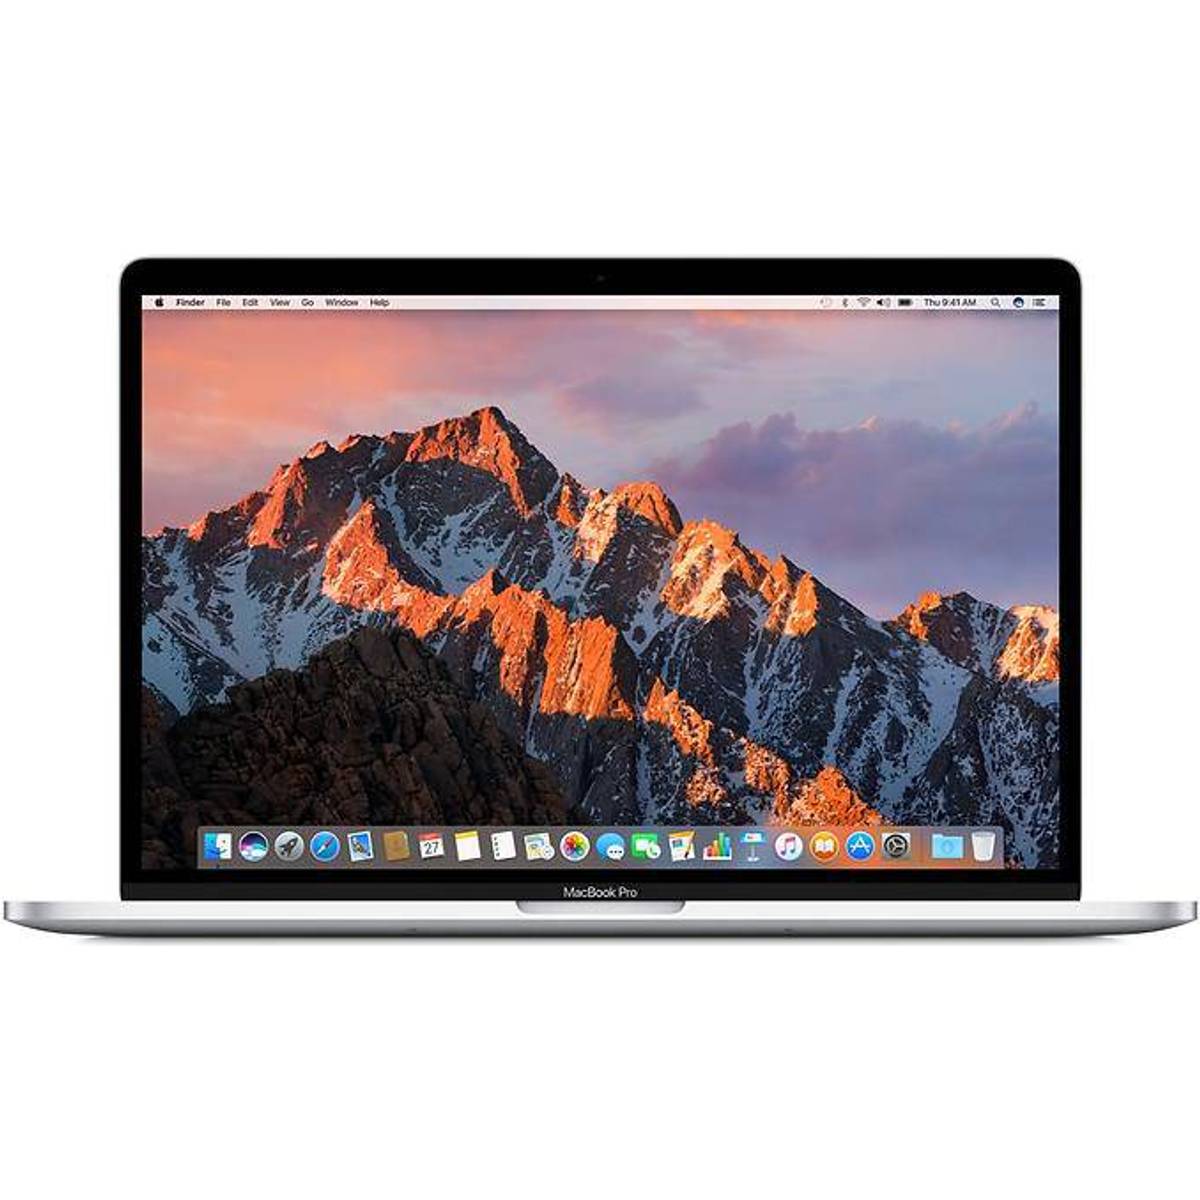 Macbook pro 15.4 • Find den billigste pris hos PriceRunner nu »